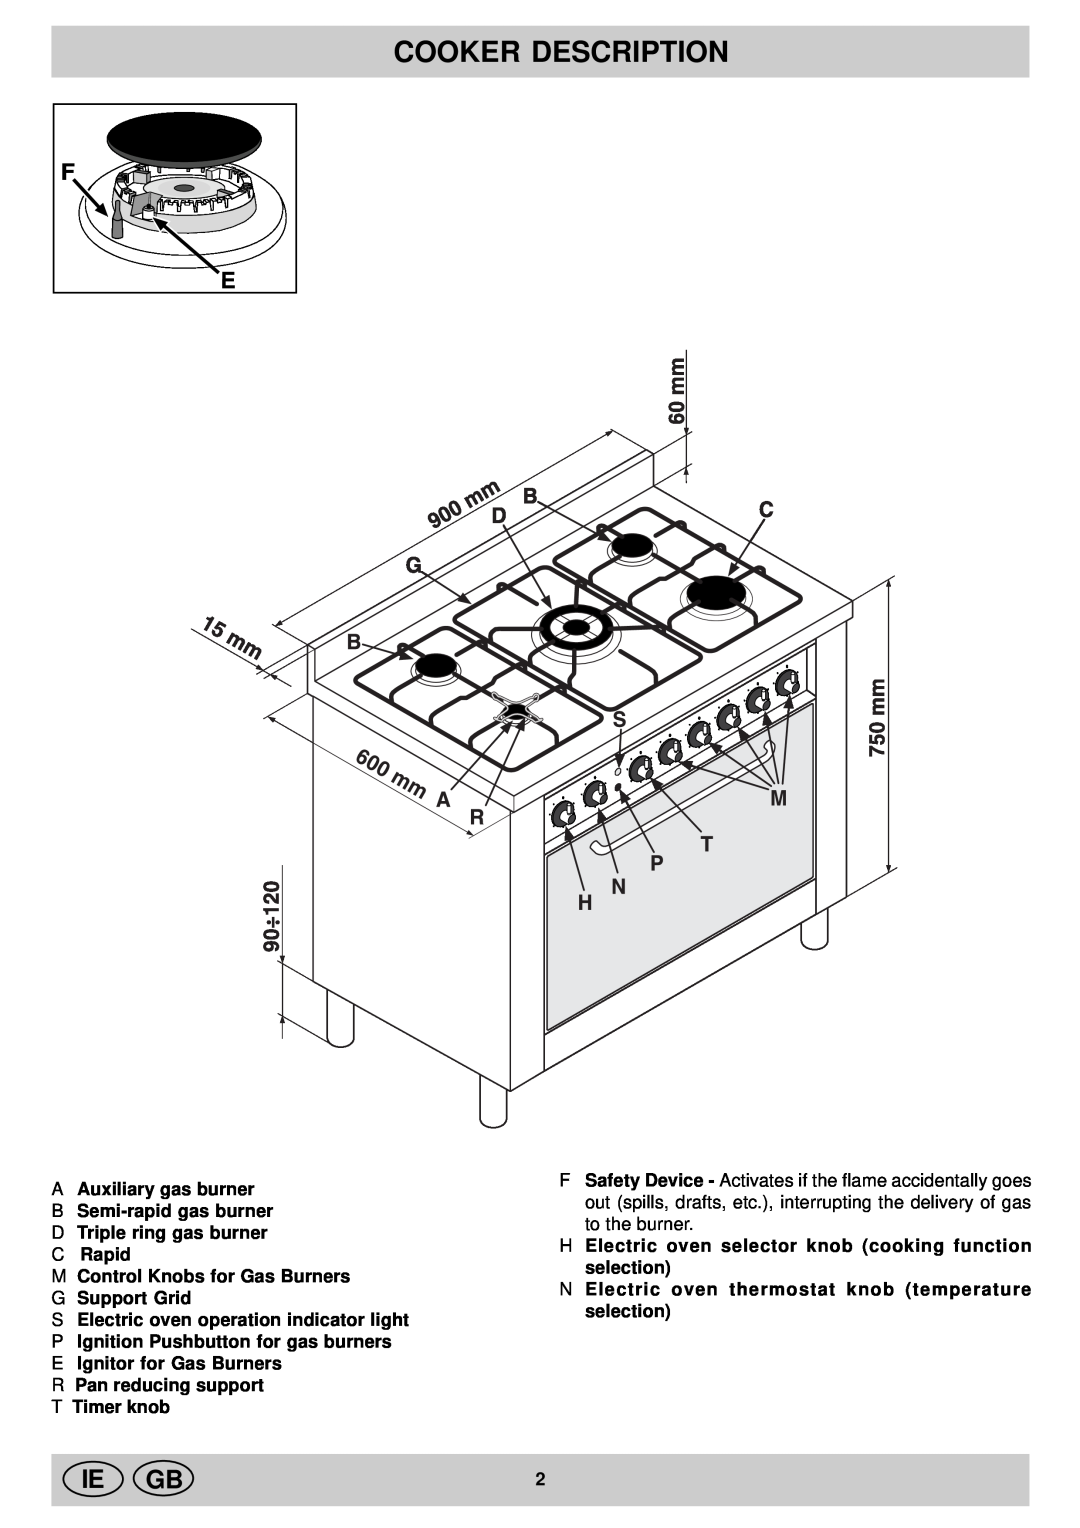 Indesit KP9507EB manual Cooker Description, Ie Gb, A Auxiliary gas burner B Semi-rapid gas burner 